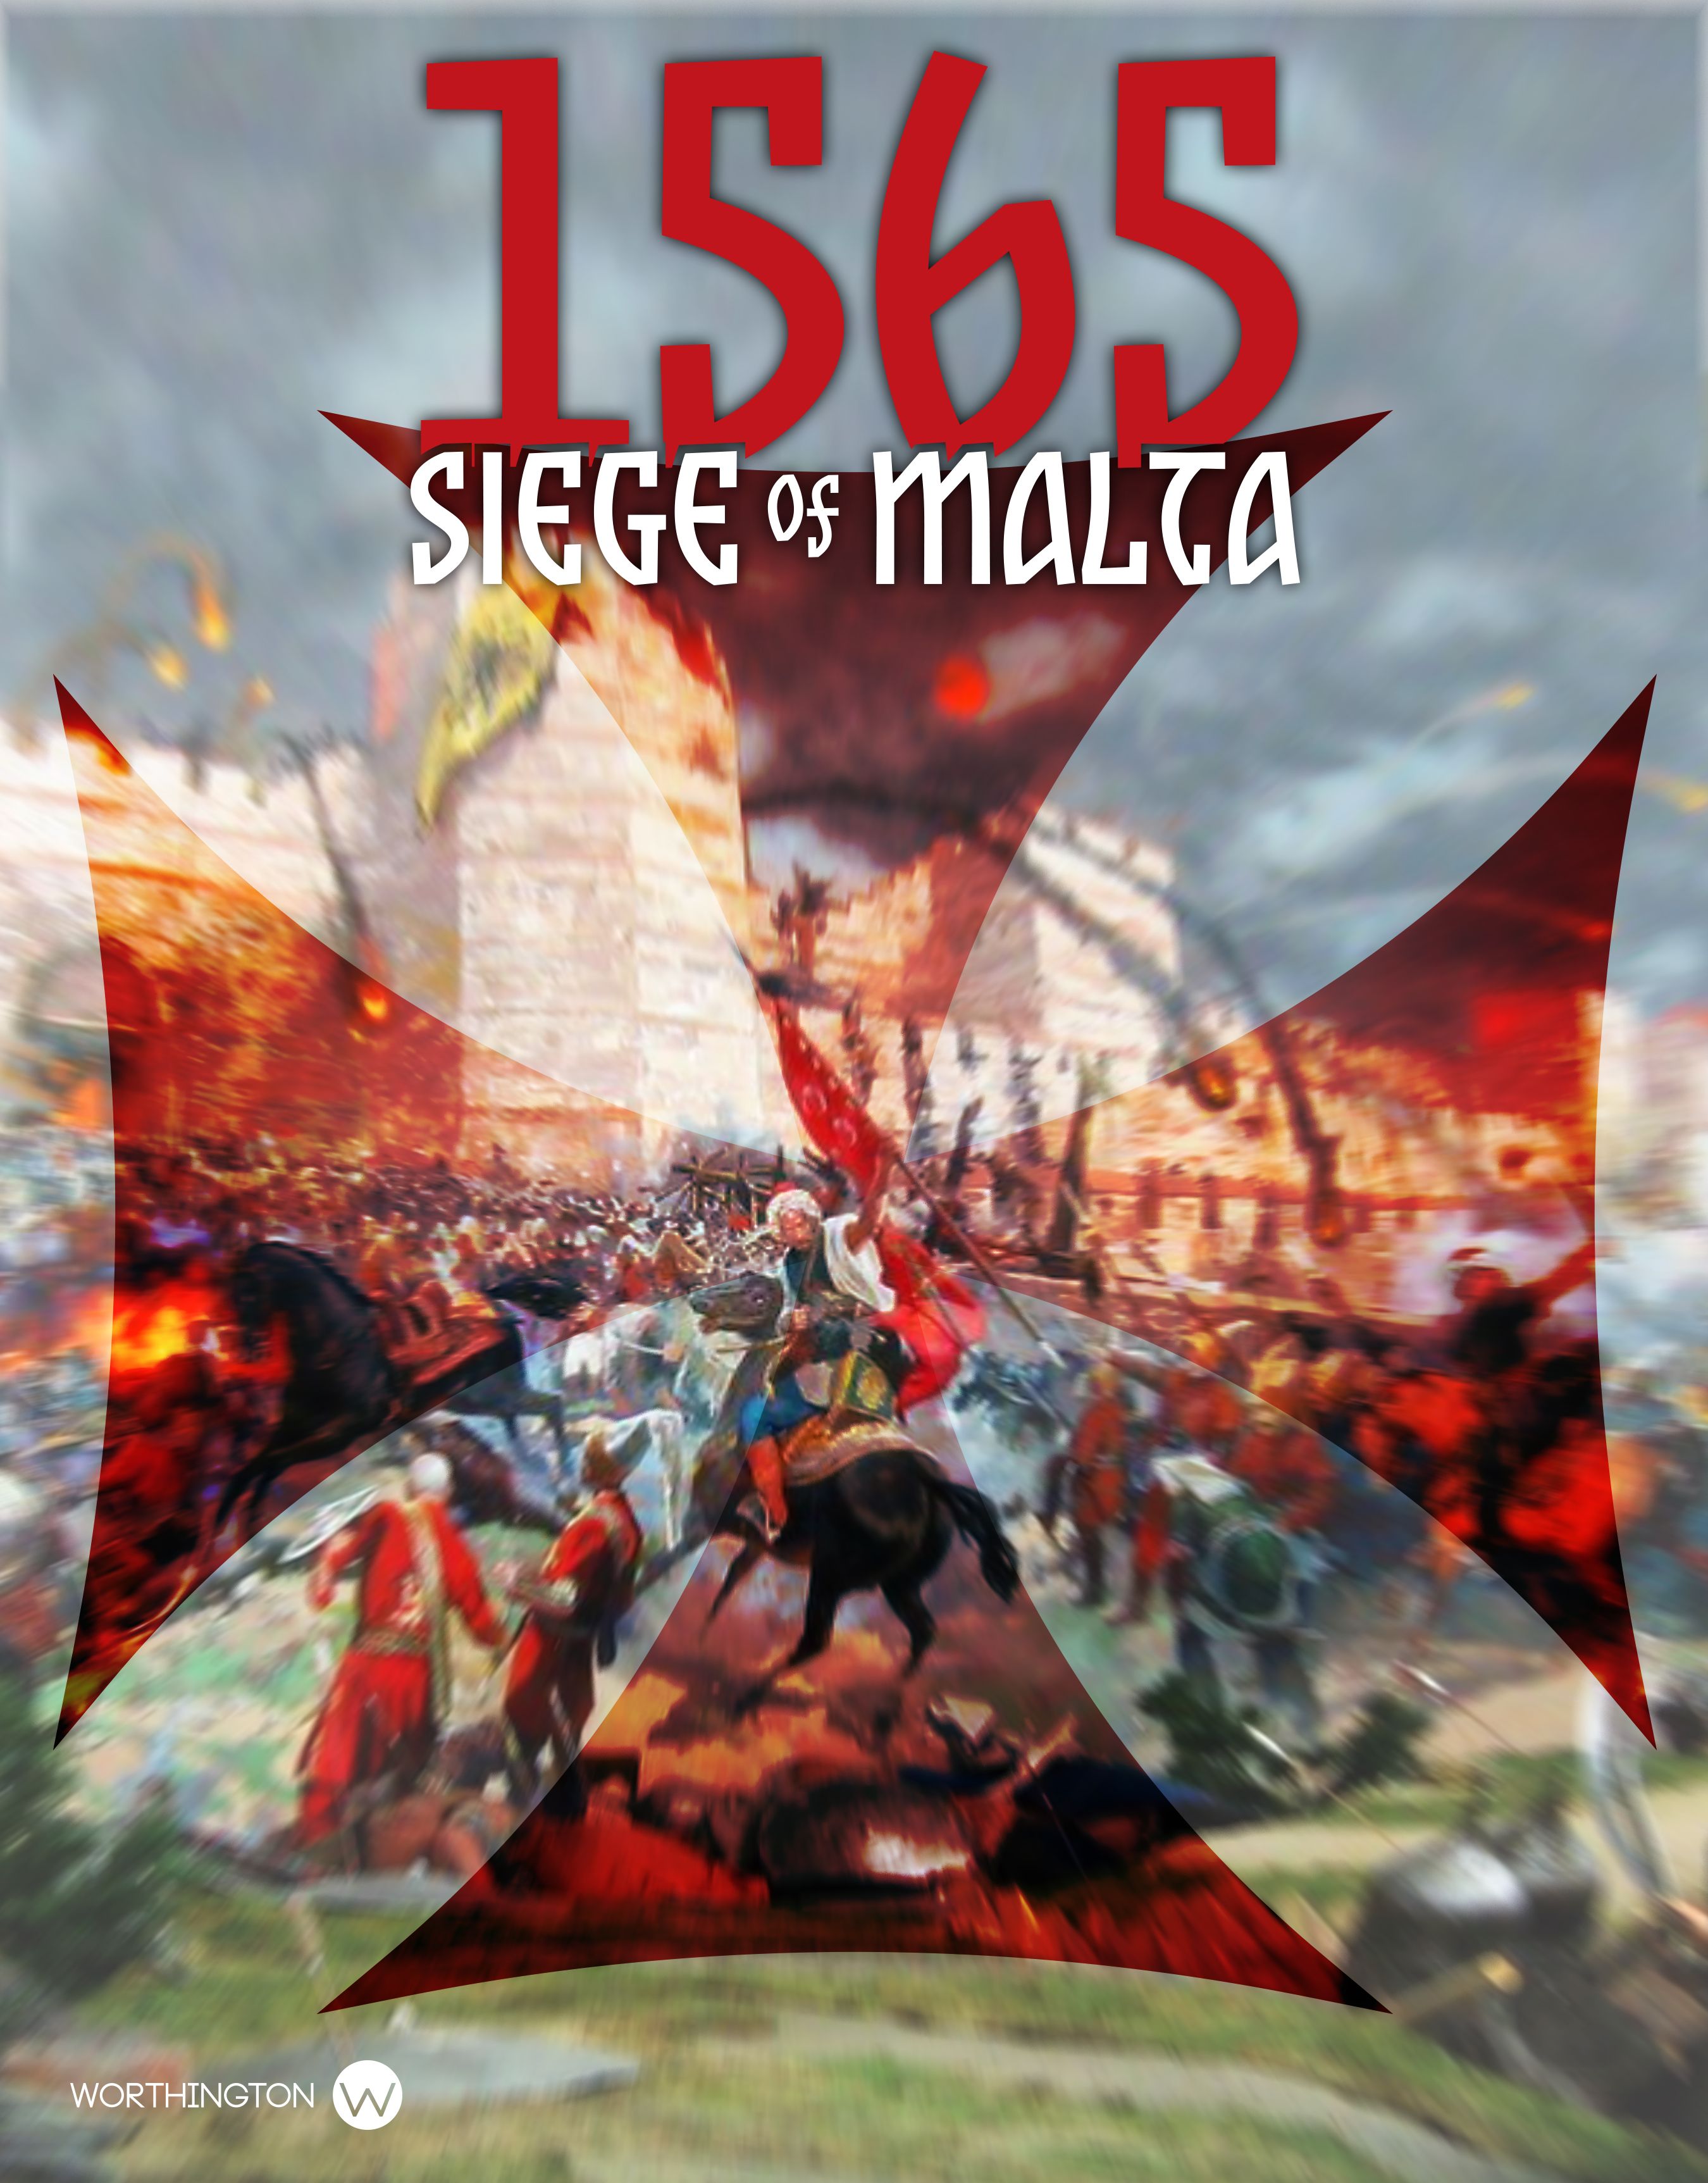 1565: Siege of Malta